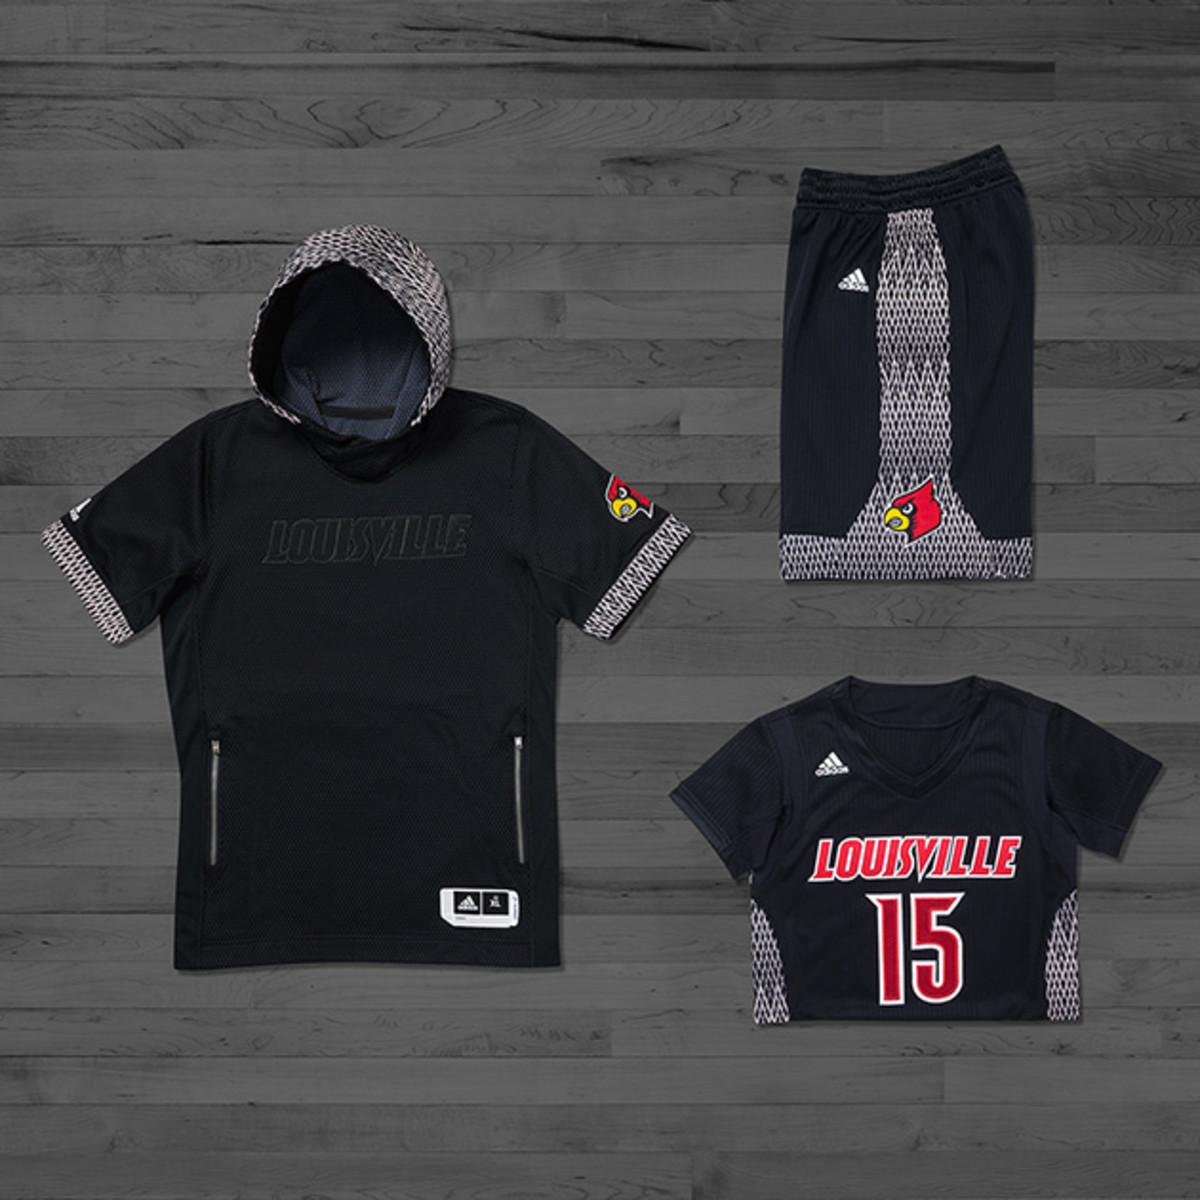 College Basketball Teams To Wear Adidas Black History Month Gear – Footwear  News